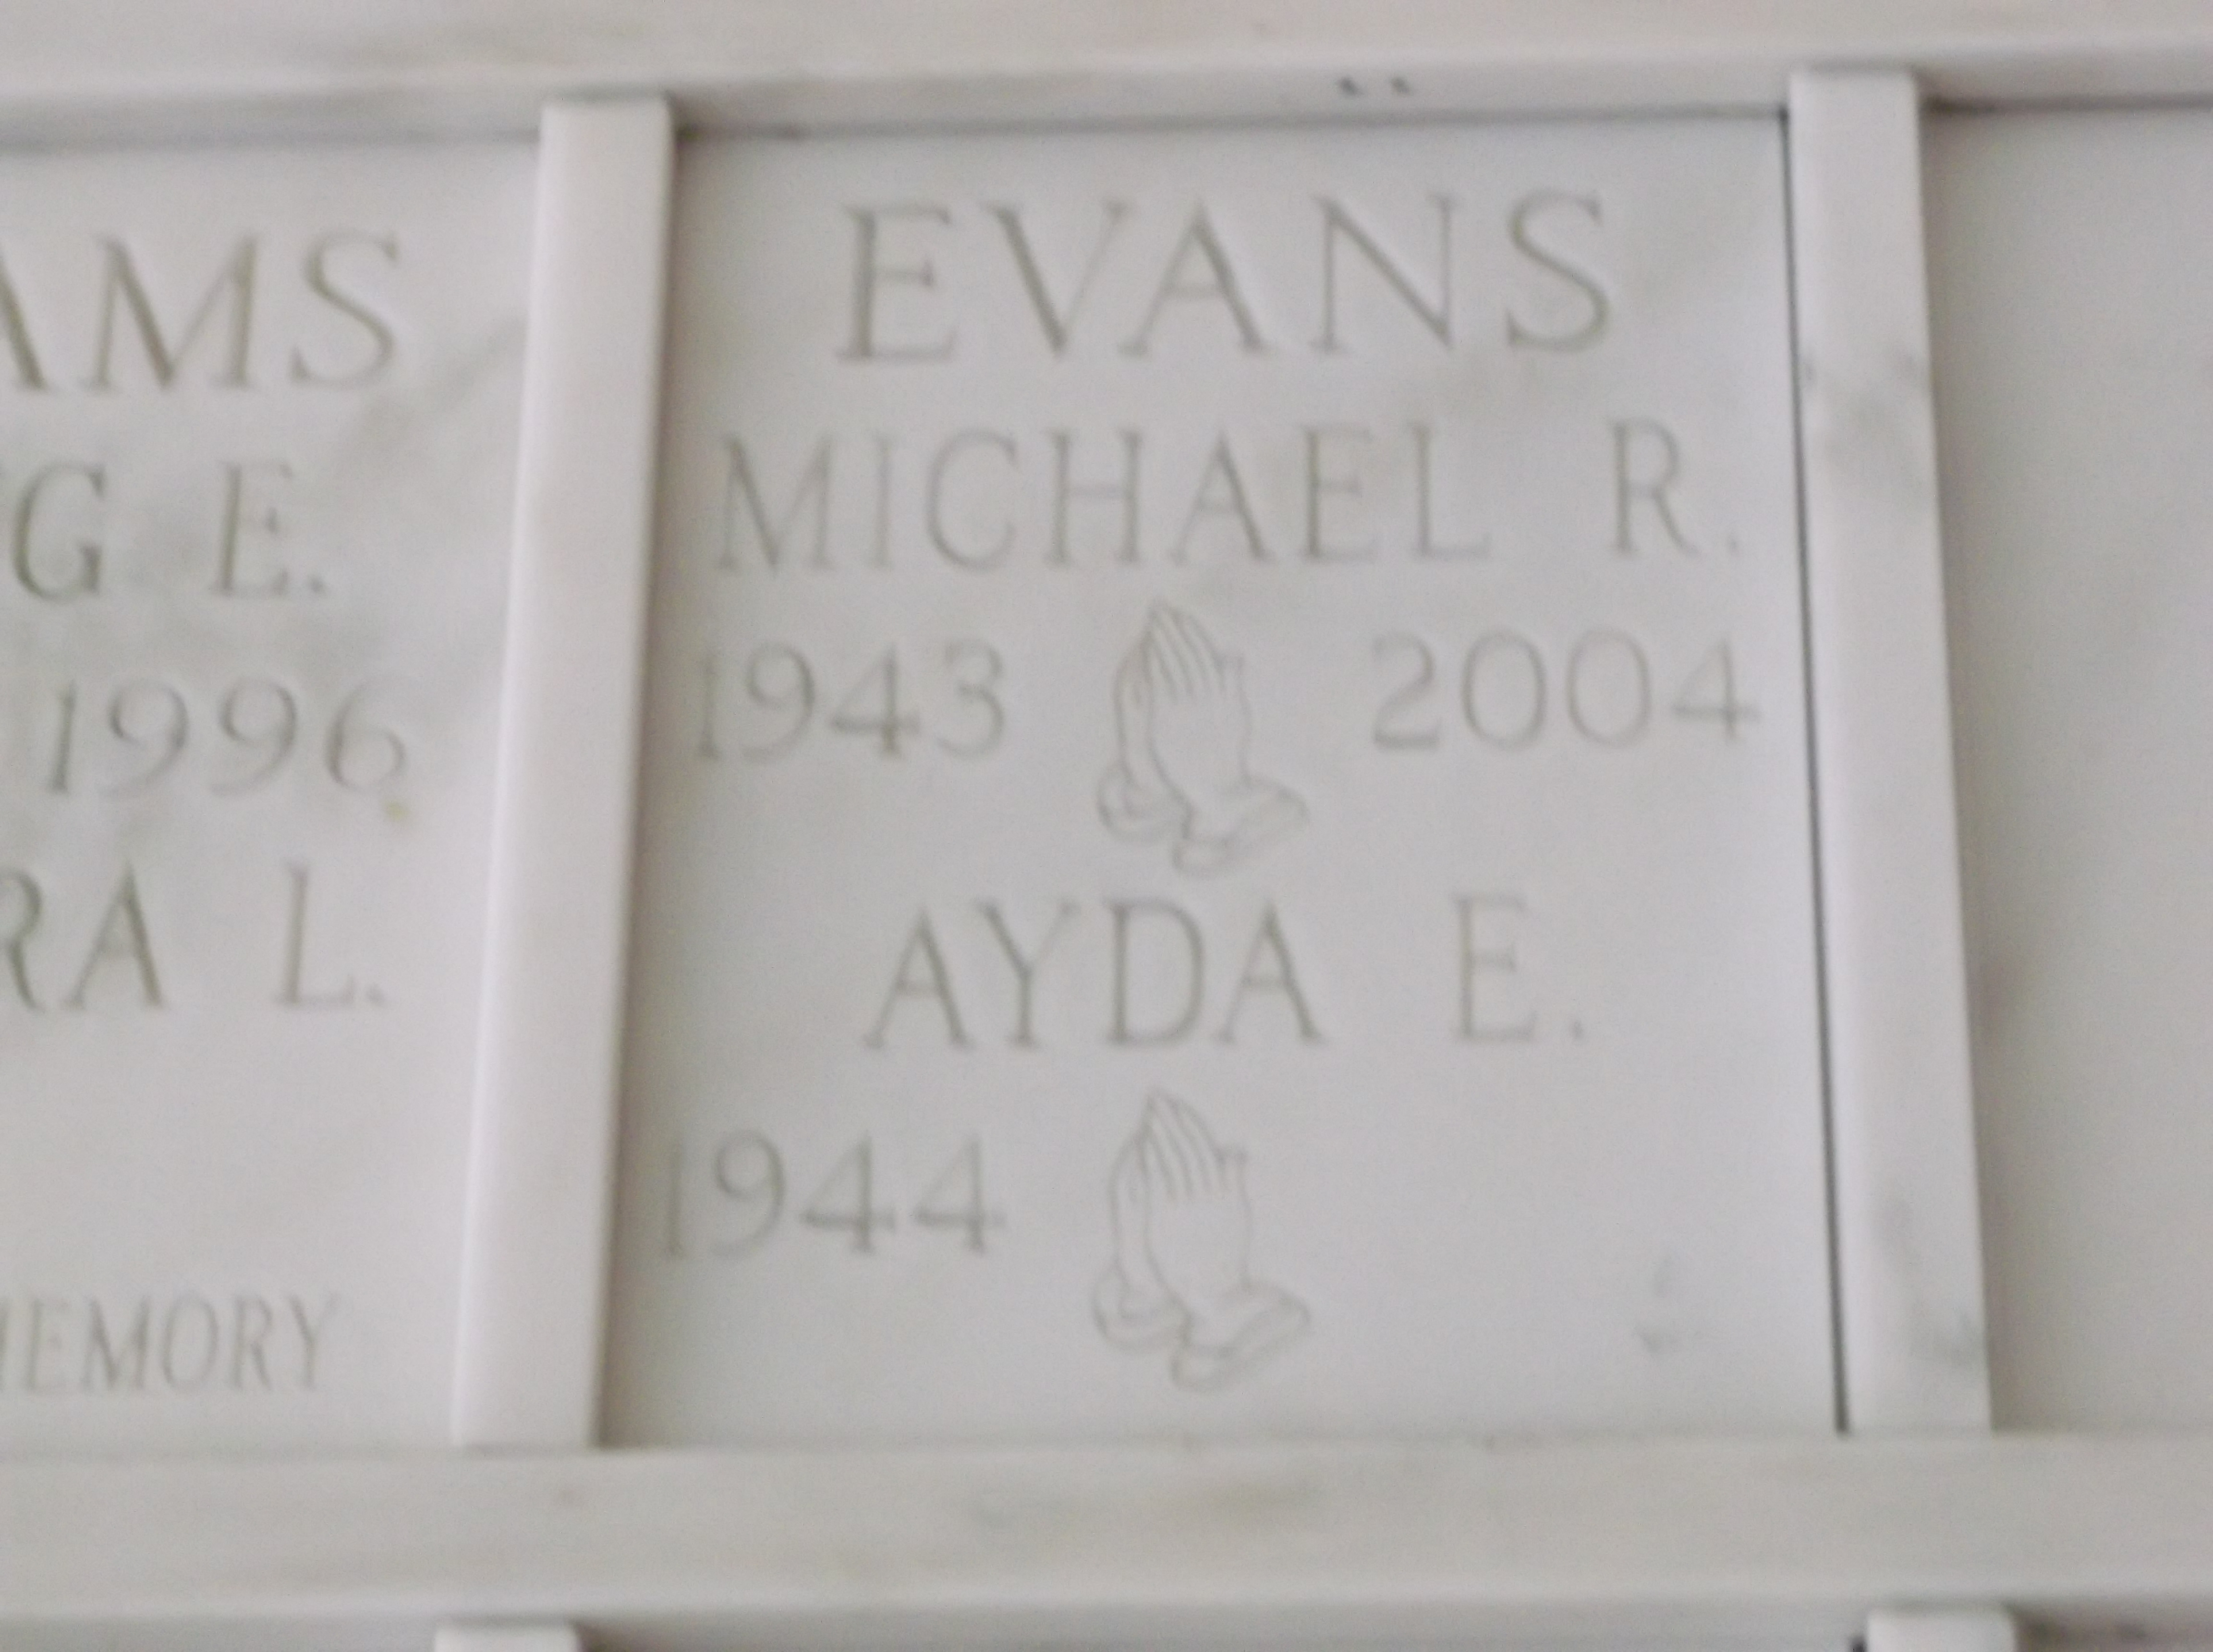 Michael R Evans